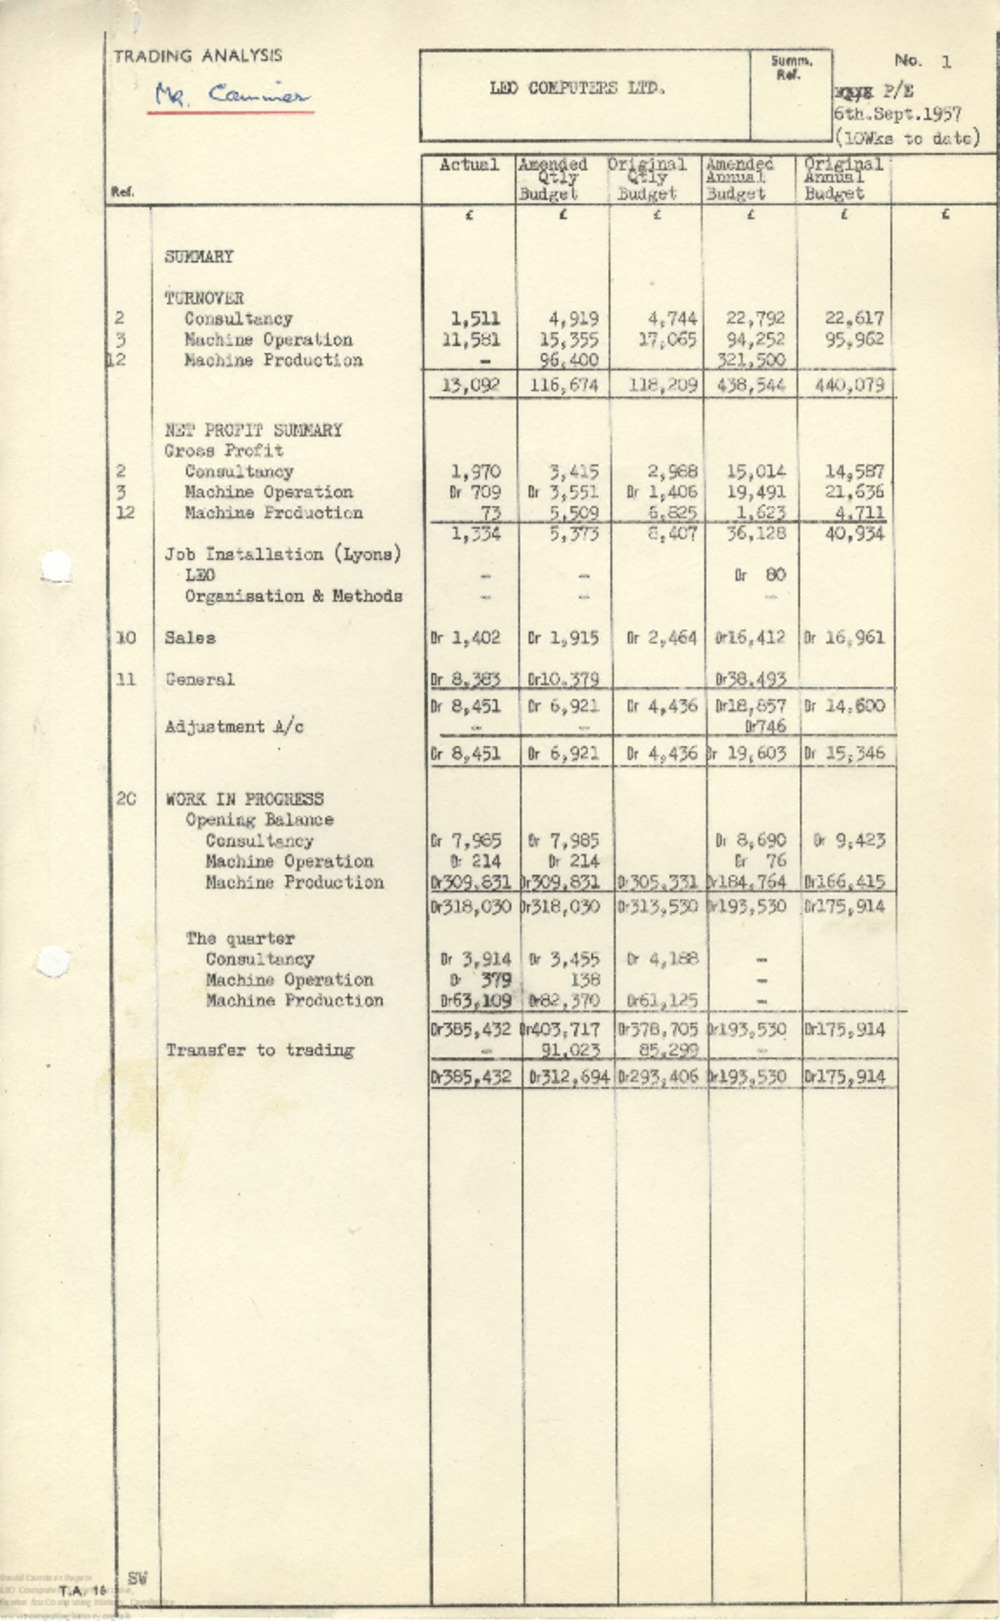 Article: 63042 Interim Trading Analysis, p/e 6th Sep 1957